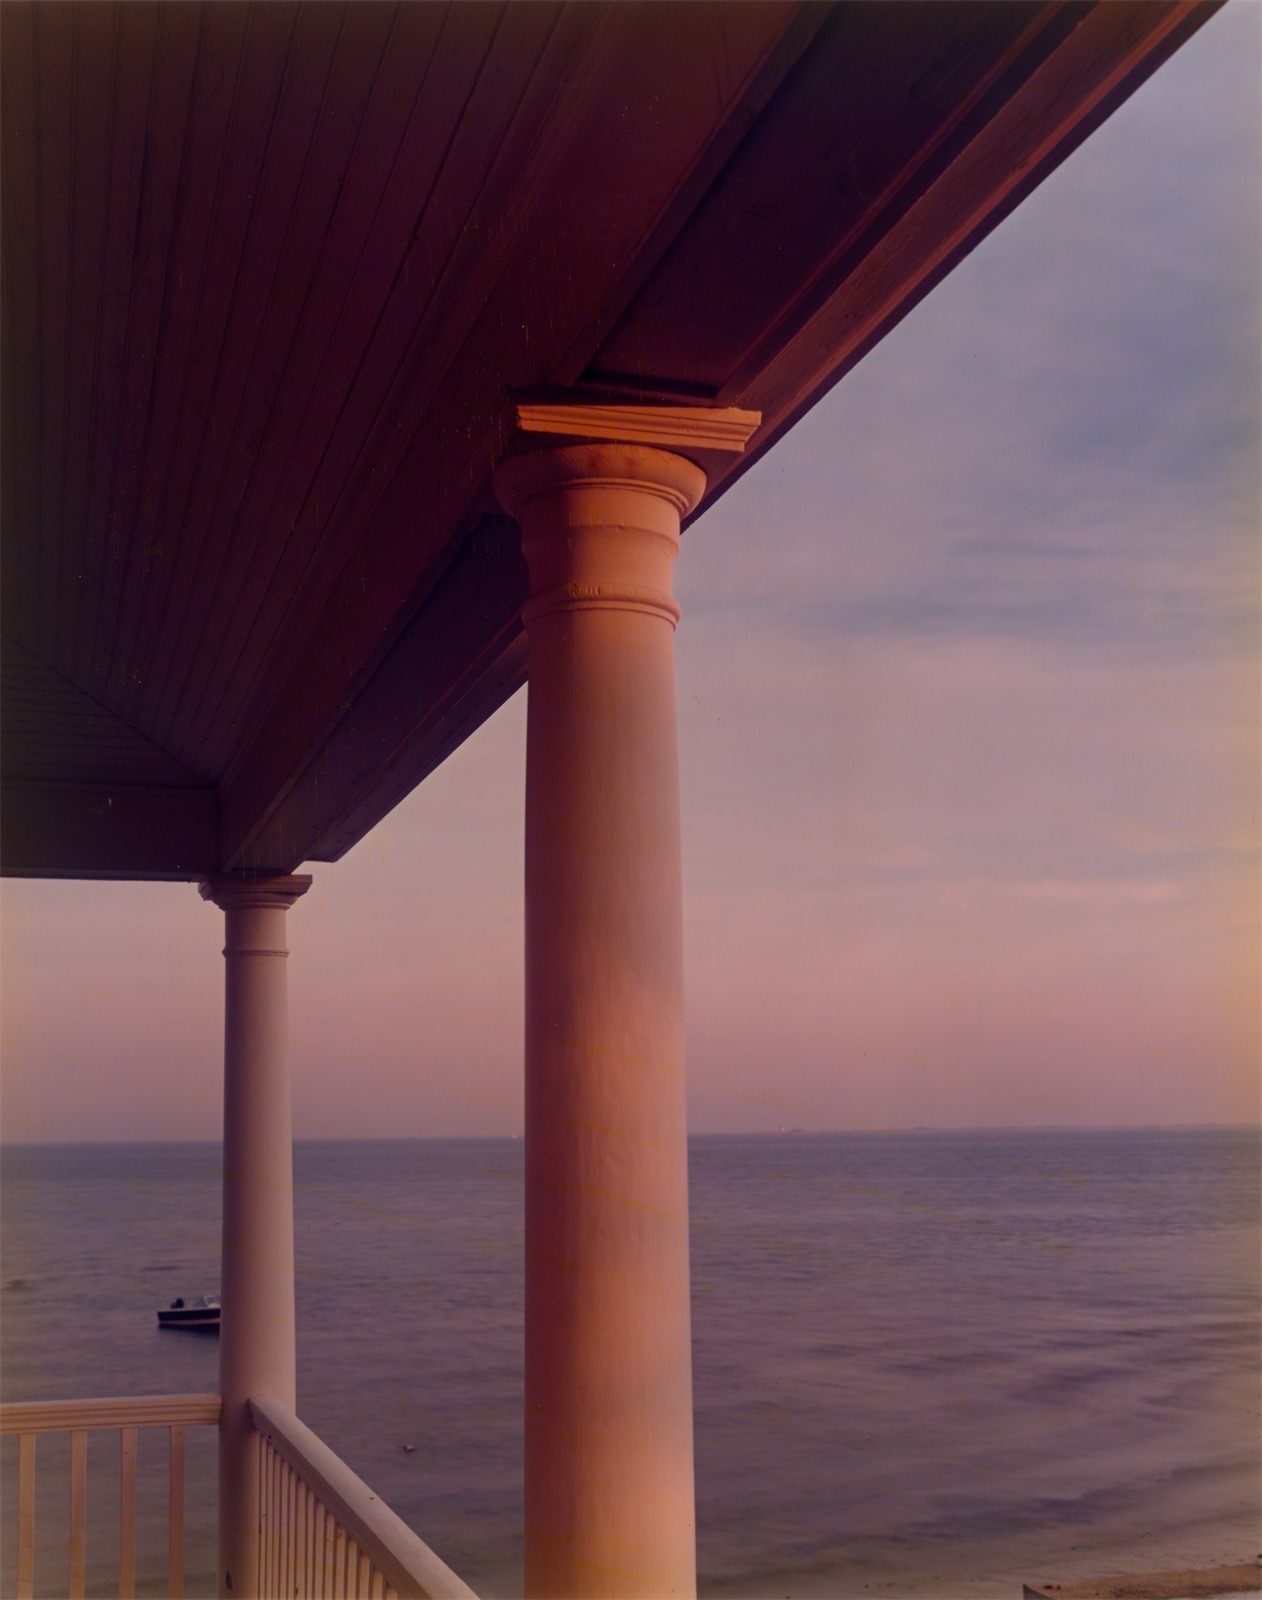 Joel Meyerowitz. ”Porch Series”, Provincetown. 1977